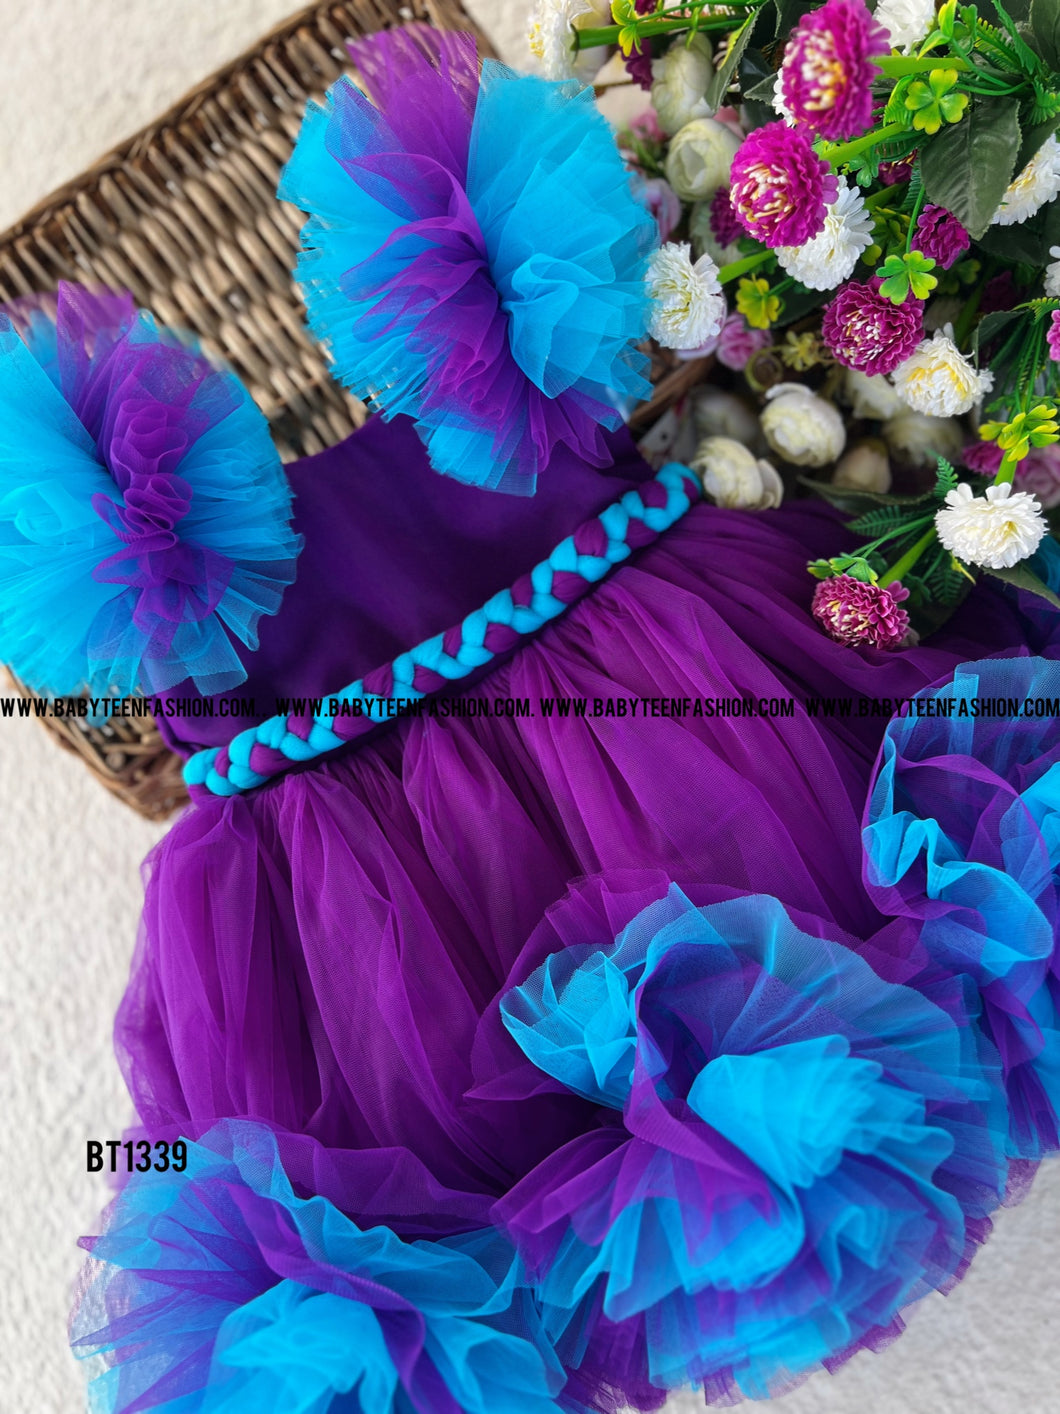 BT1339 Vibrant Violet Frolic Dress - A Whirl of Delight